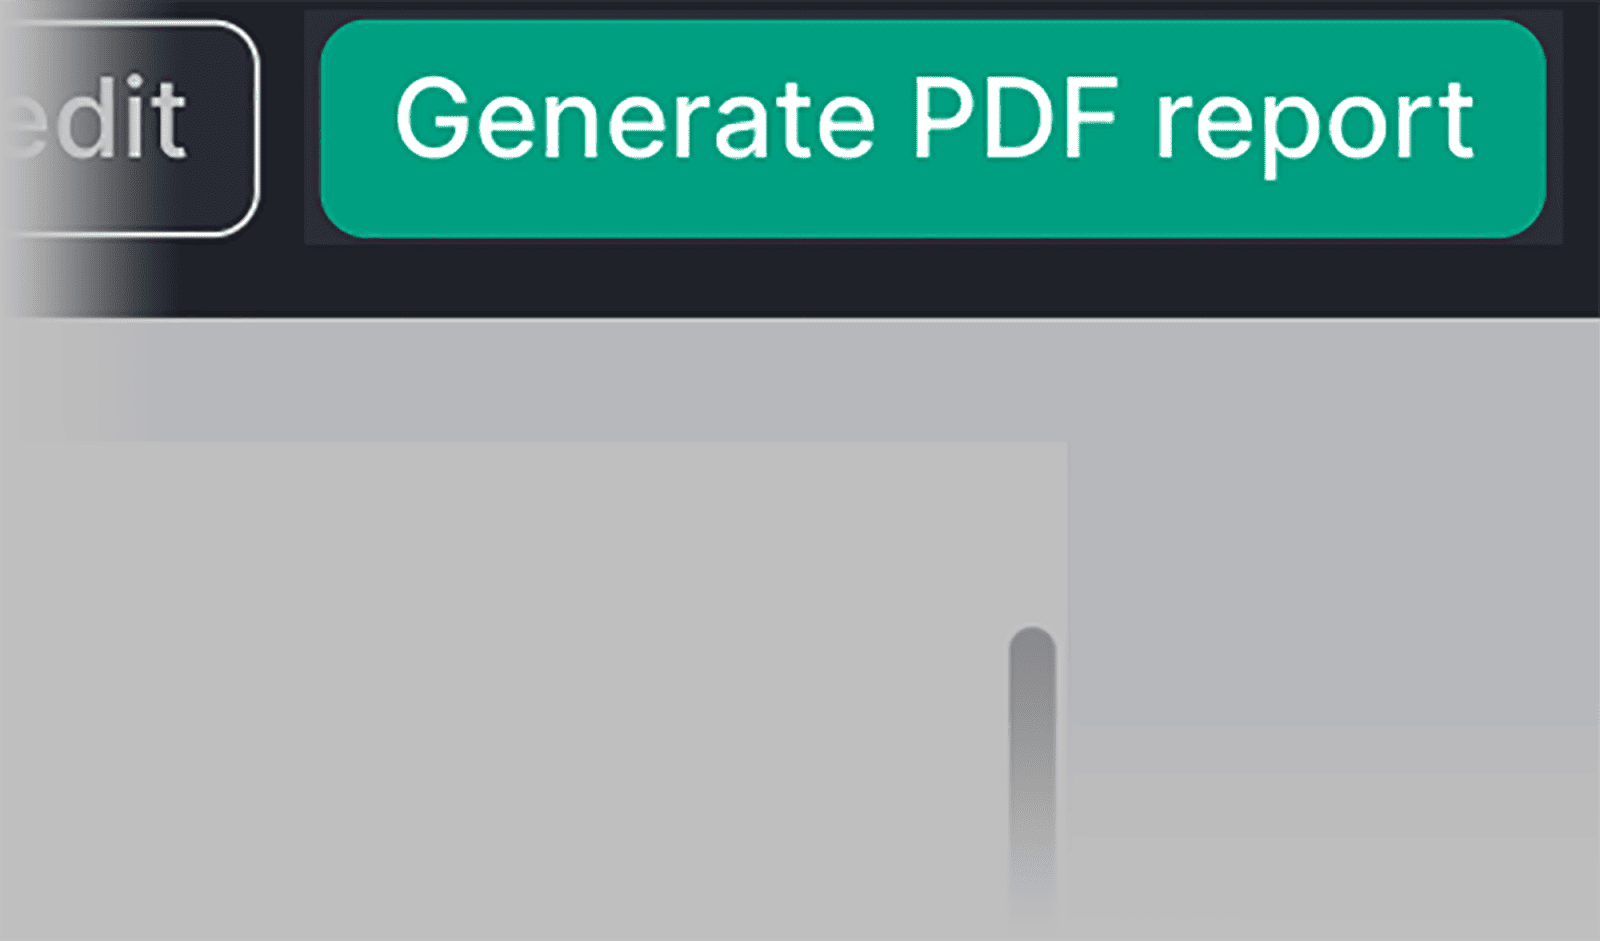 Click on generate a PDF report